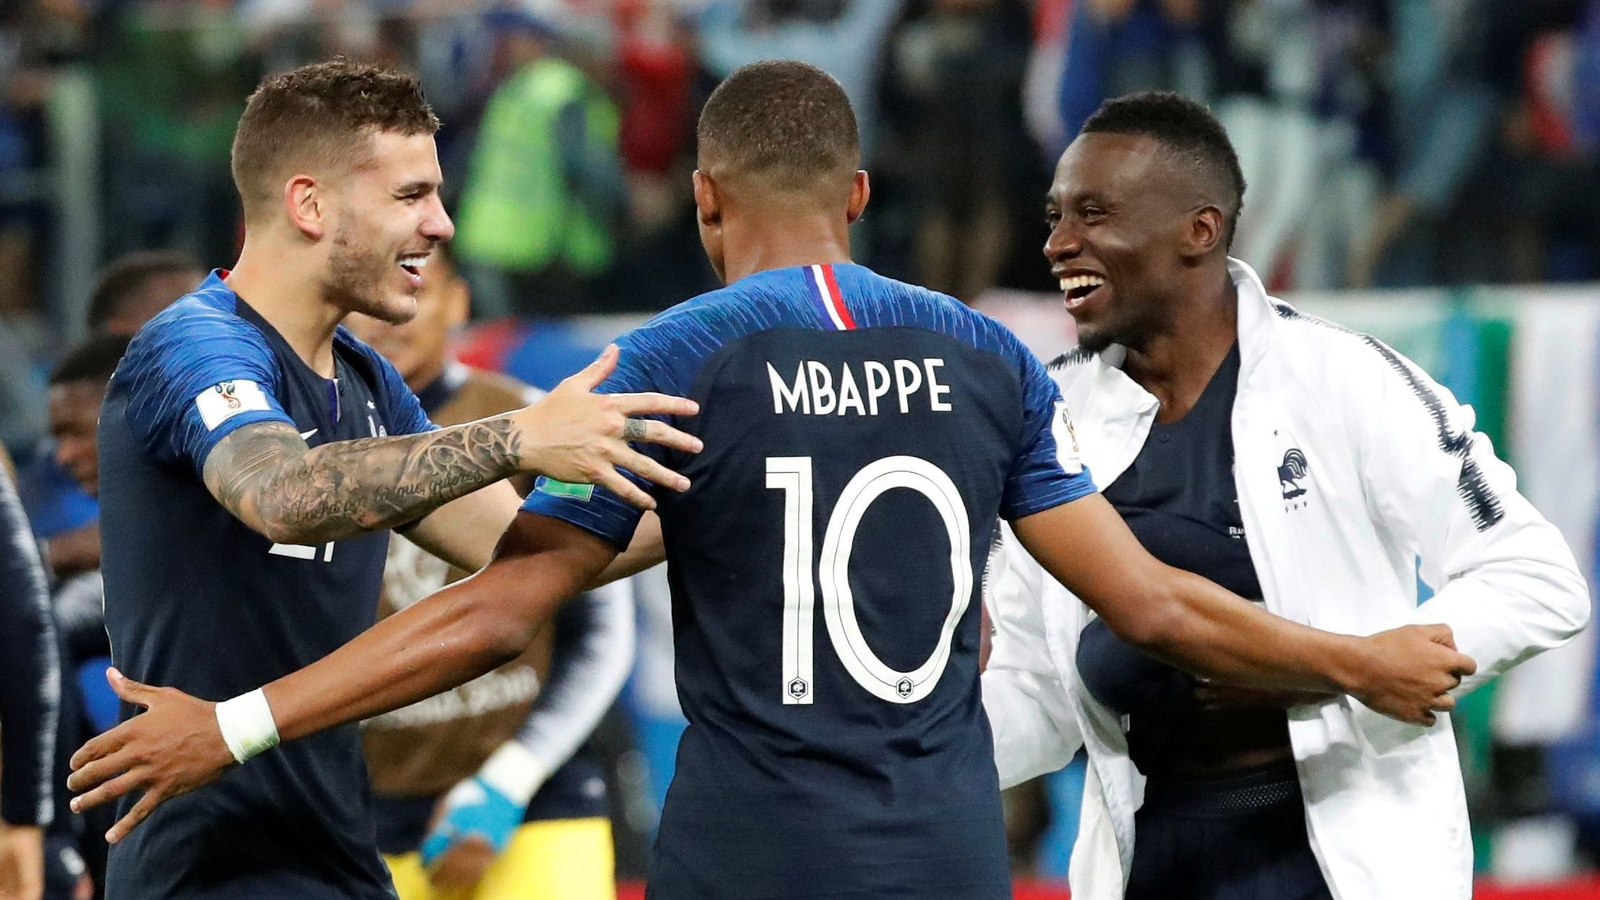 World Cup 2018: France's success masks underlying race tensions - Quartz